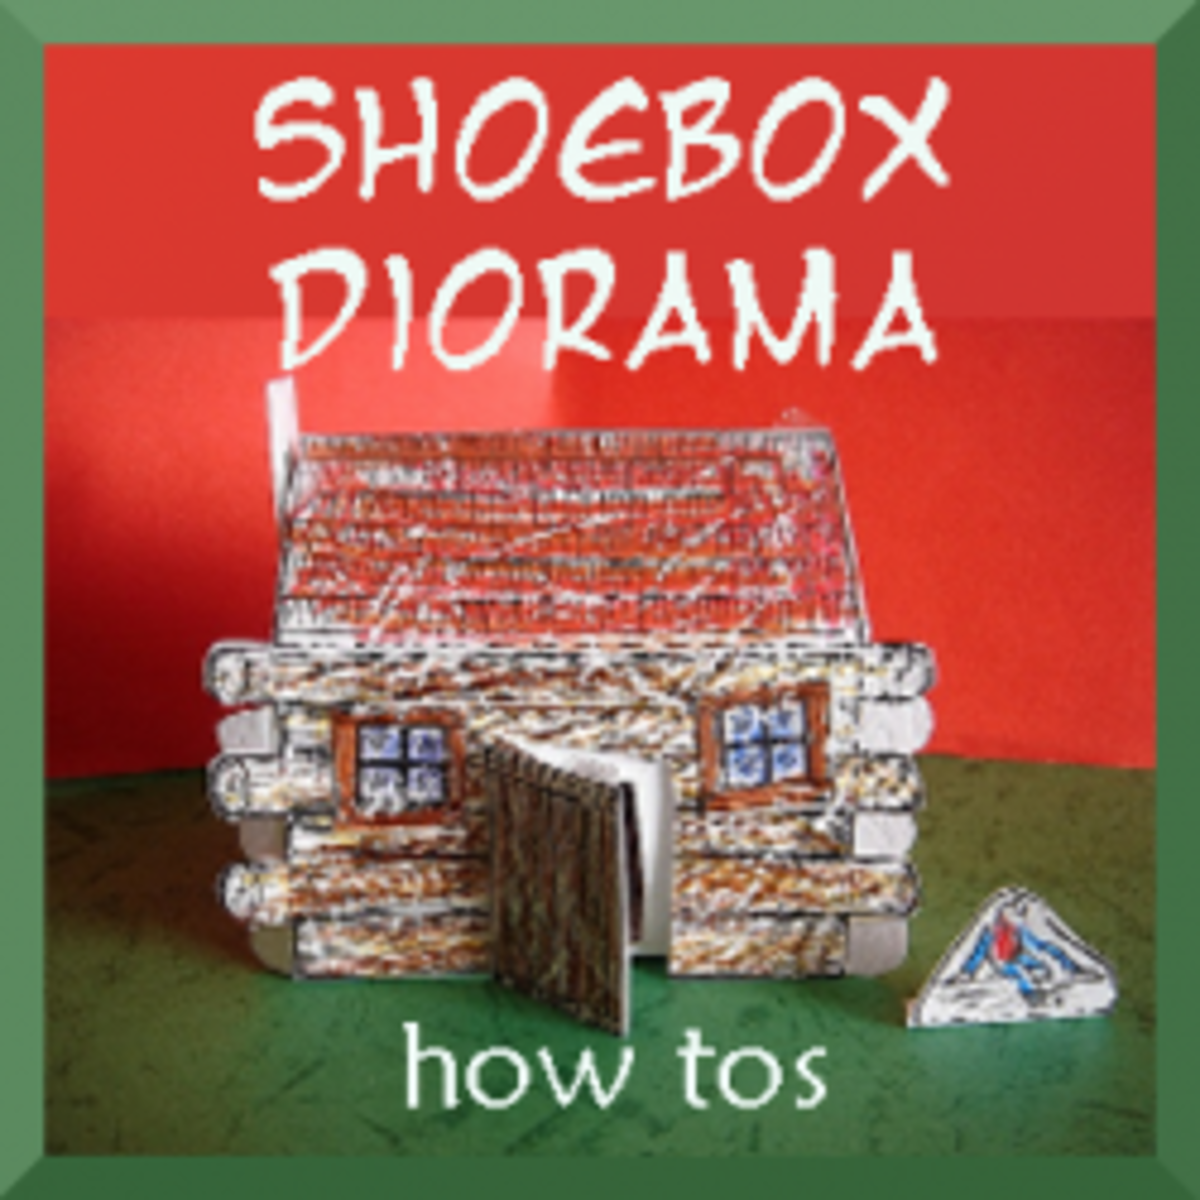 Book report diorama instructions